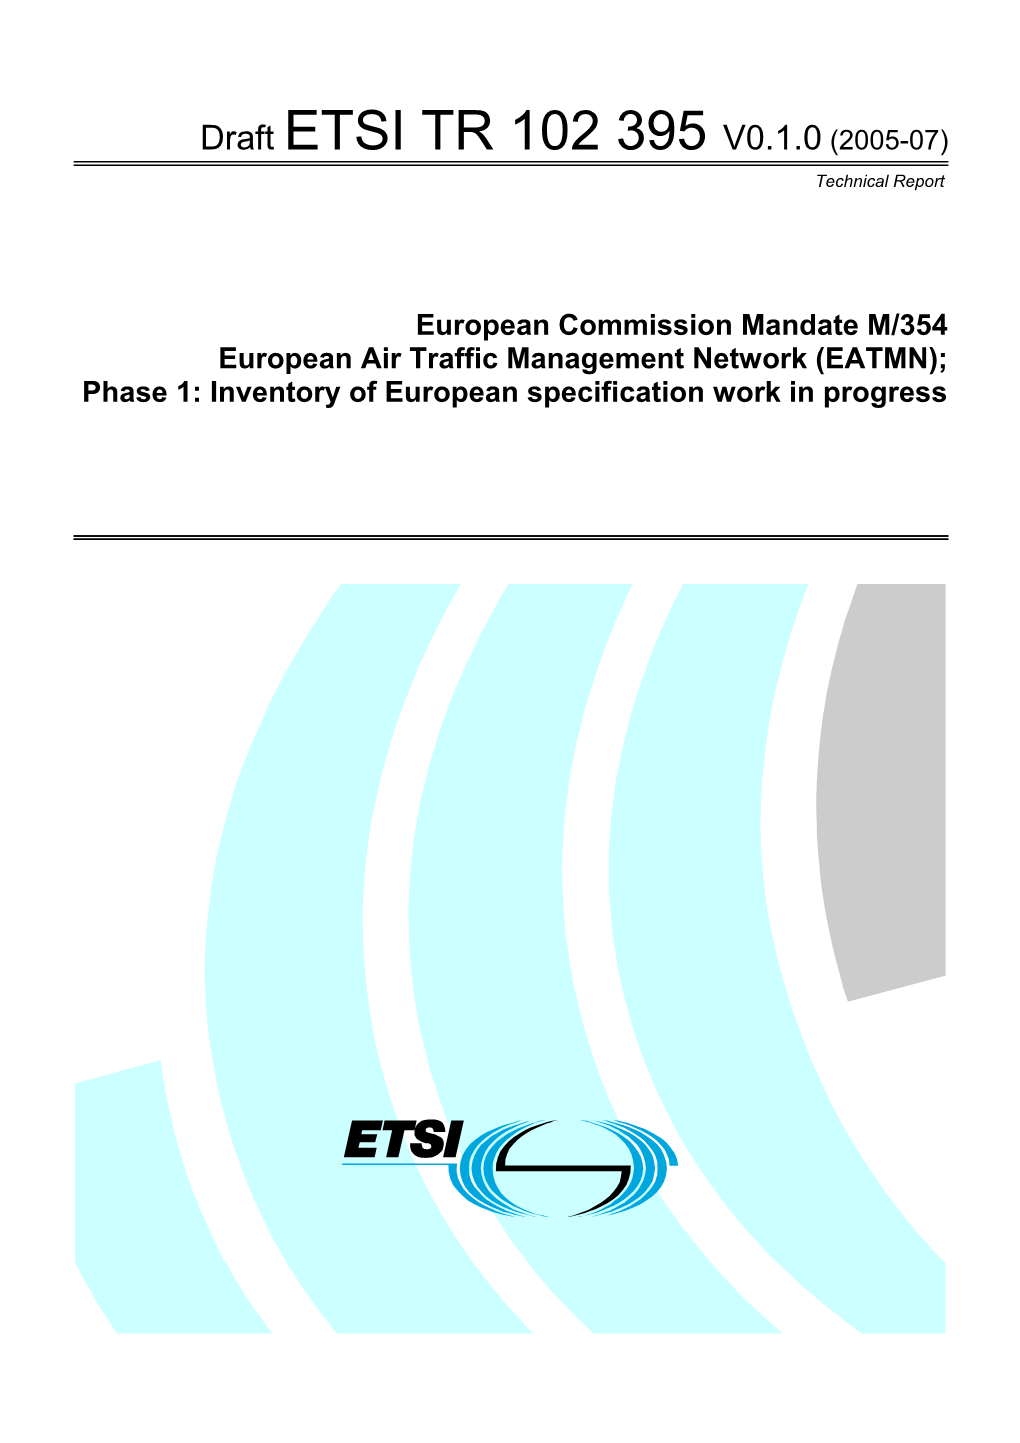 European Air Traffic Management Network (EATMN);